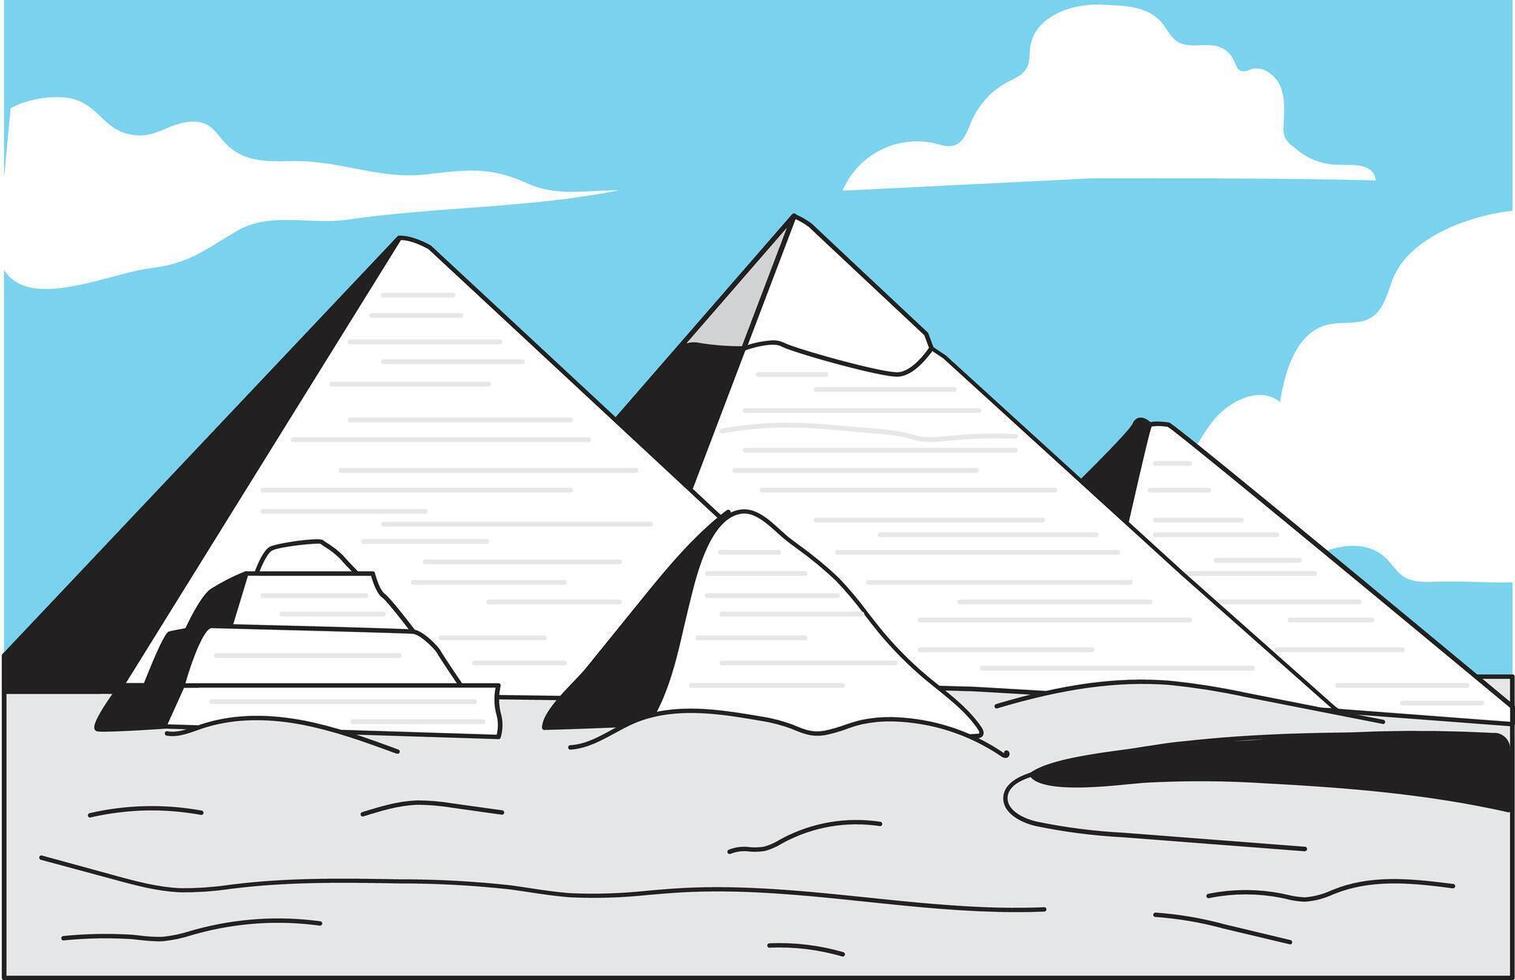 Egyptian pyramids. Vector illustration on a blue sky background.